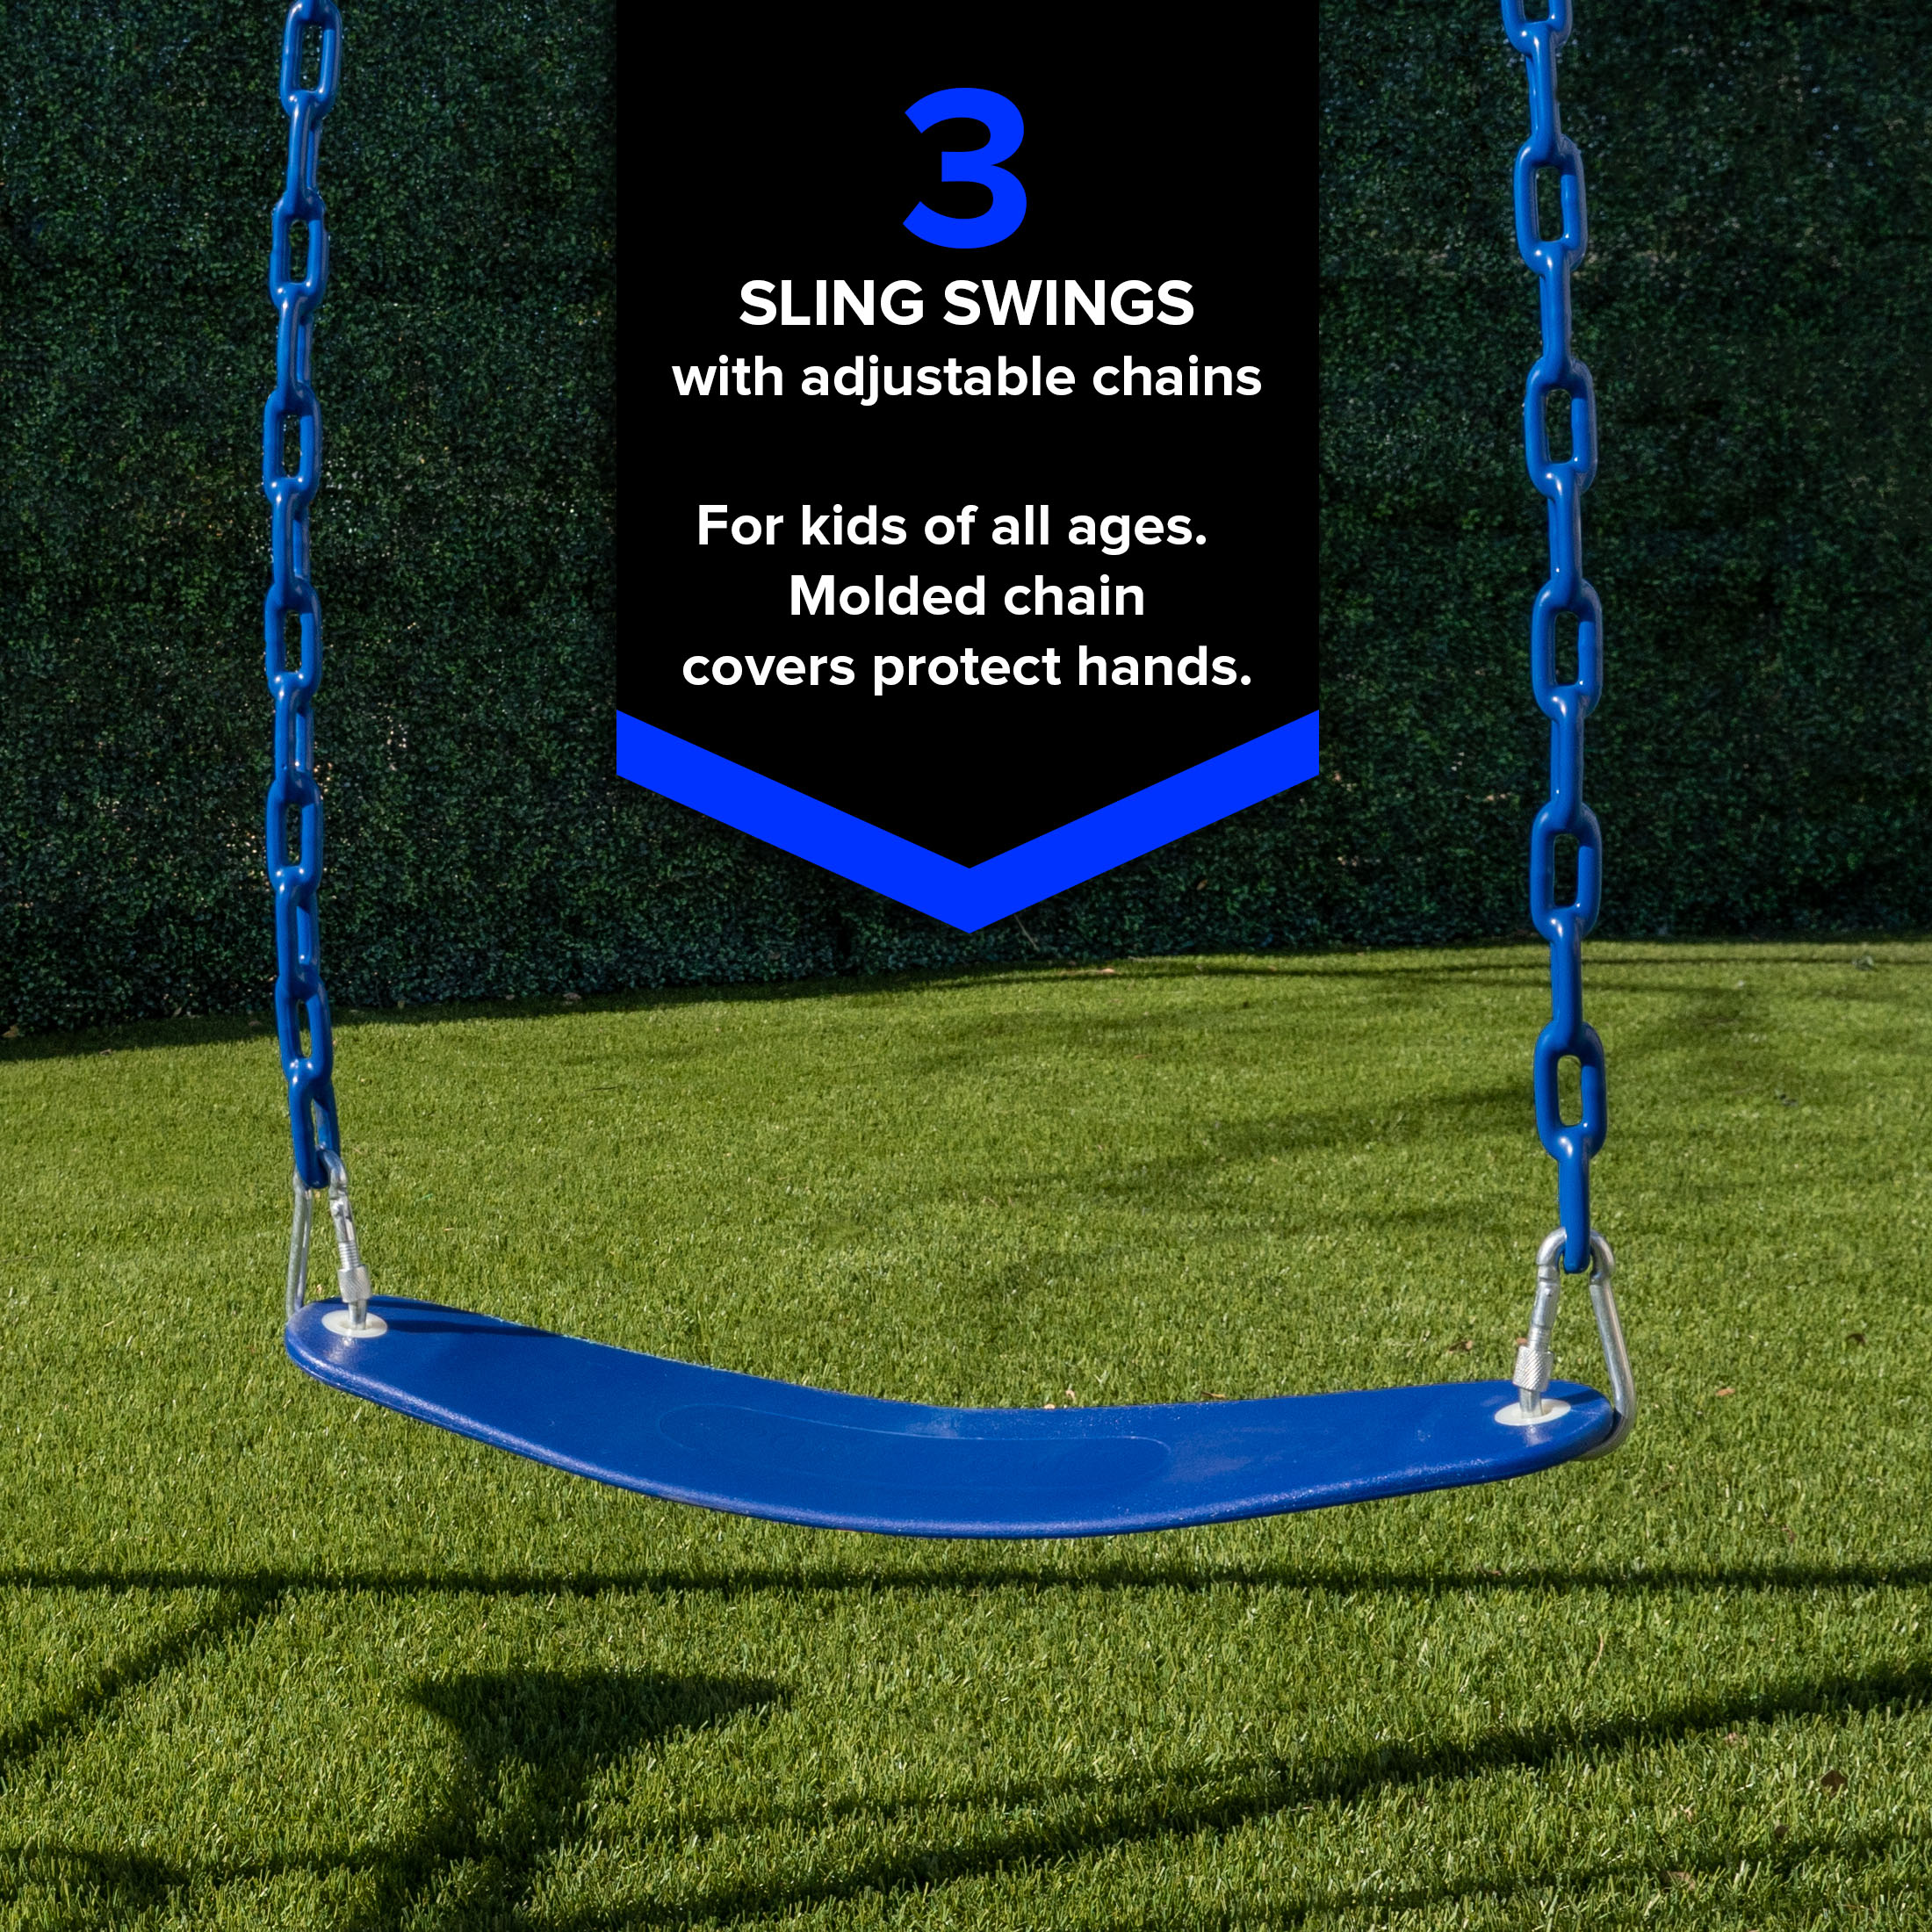 Sportspower Triple Swing & Saucer Metal Swing Set with Saucer Swing, 3 Adjustable Swings, & 5' Double Wall Slide with Lifetime Warranty - image 5 of 9